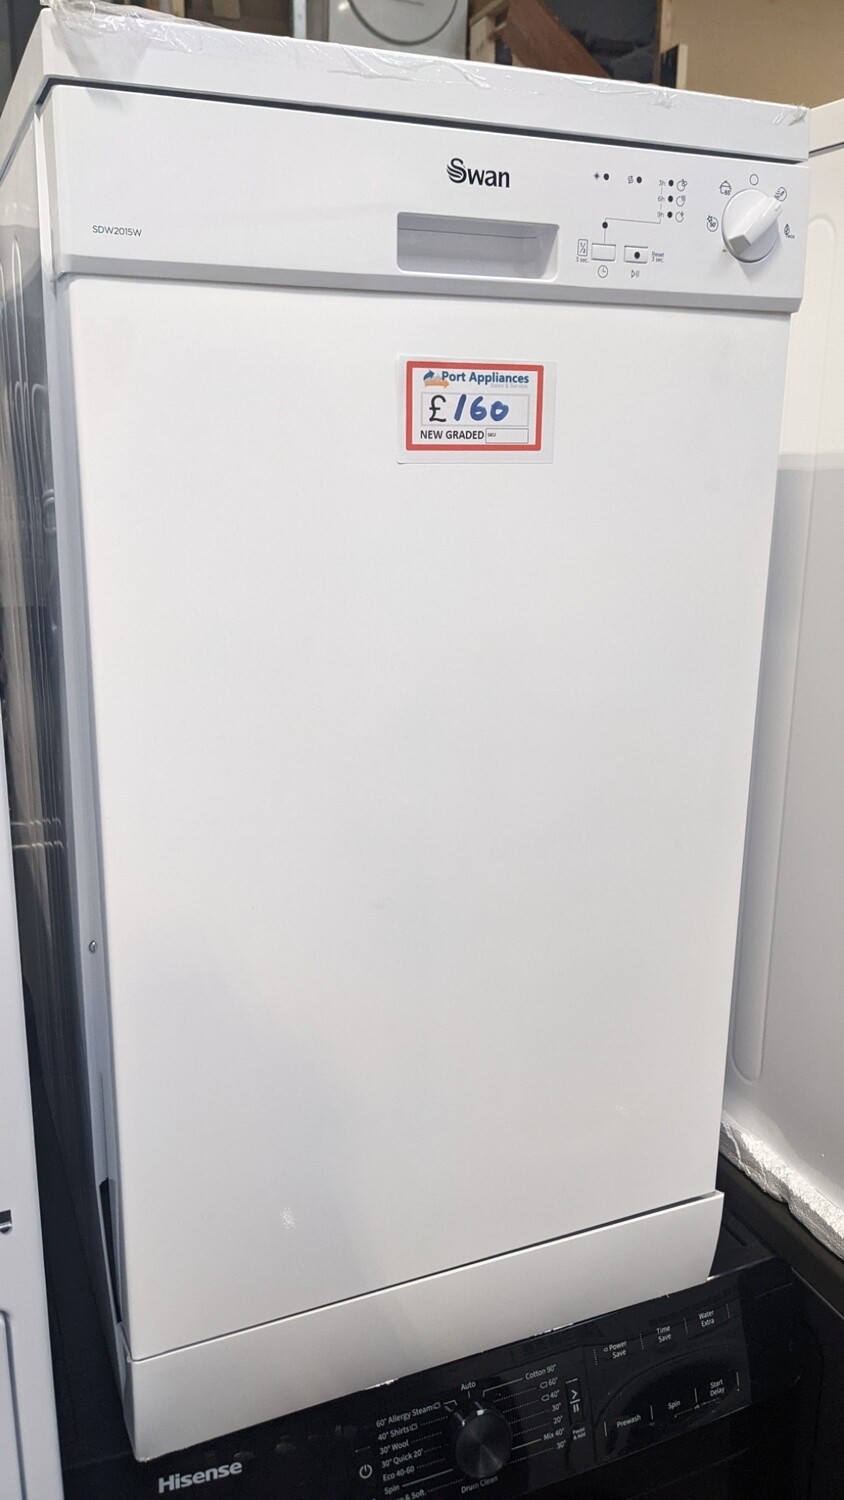 Swan 45cm Freestanding Slimline Dishwasher in White - New Graded + 12 Months Guarantee 